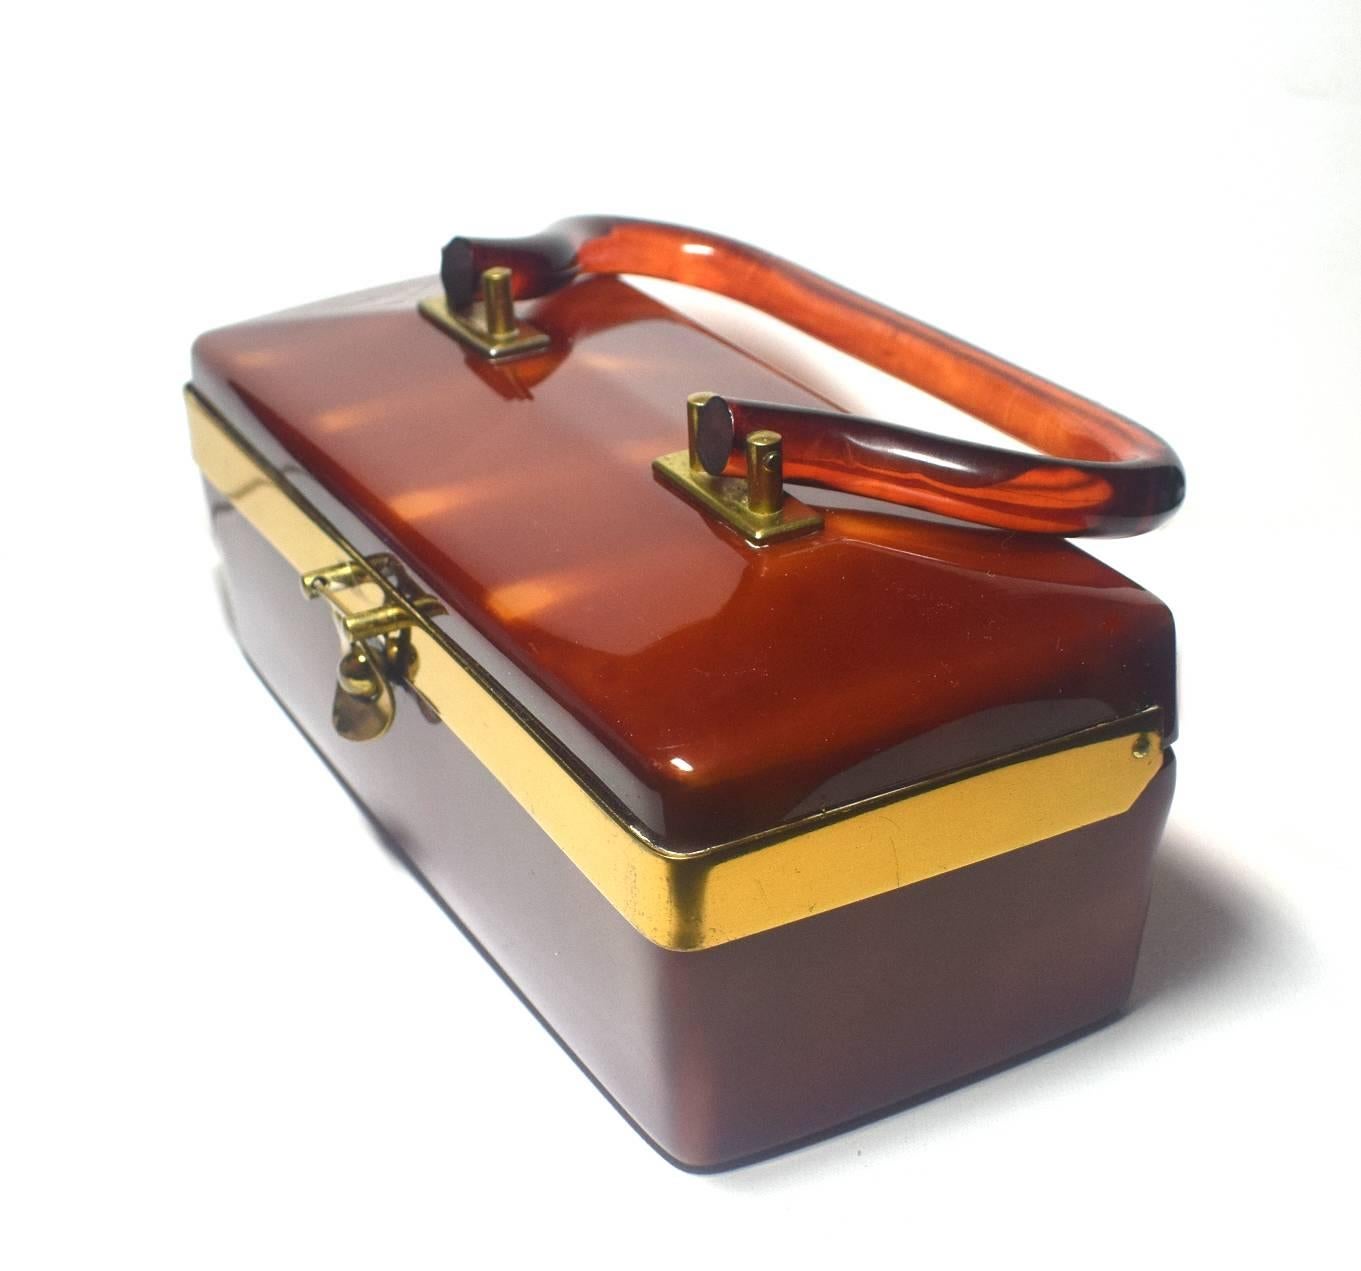 European Art Deco Lucite Box Bag in Deep Caramel Coloring